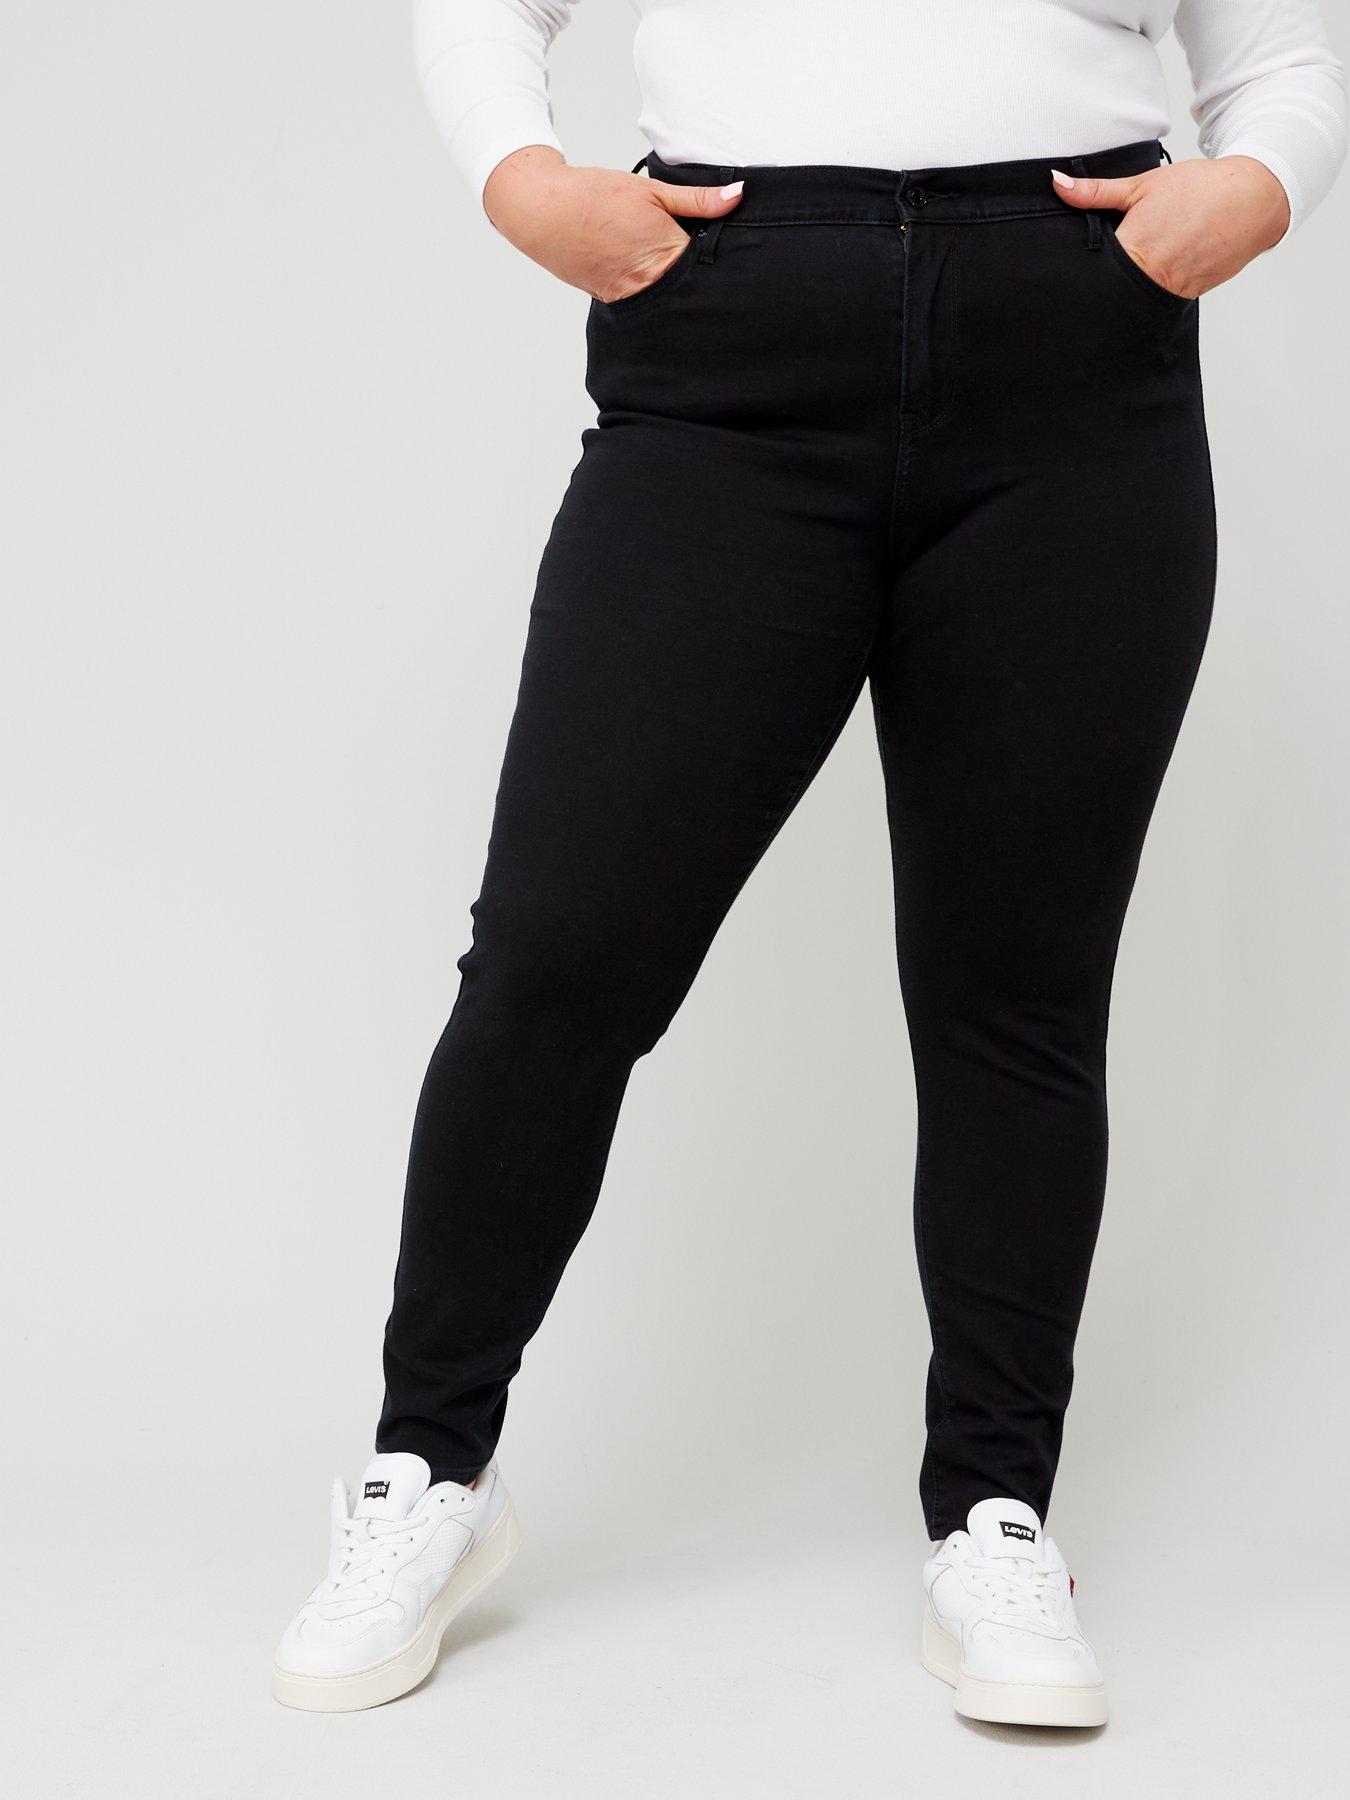  Levis Womens Plus-Size 414 Classic Straight Jeans, Soft  Black, 36